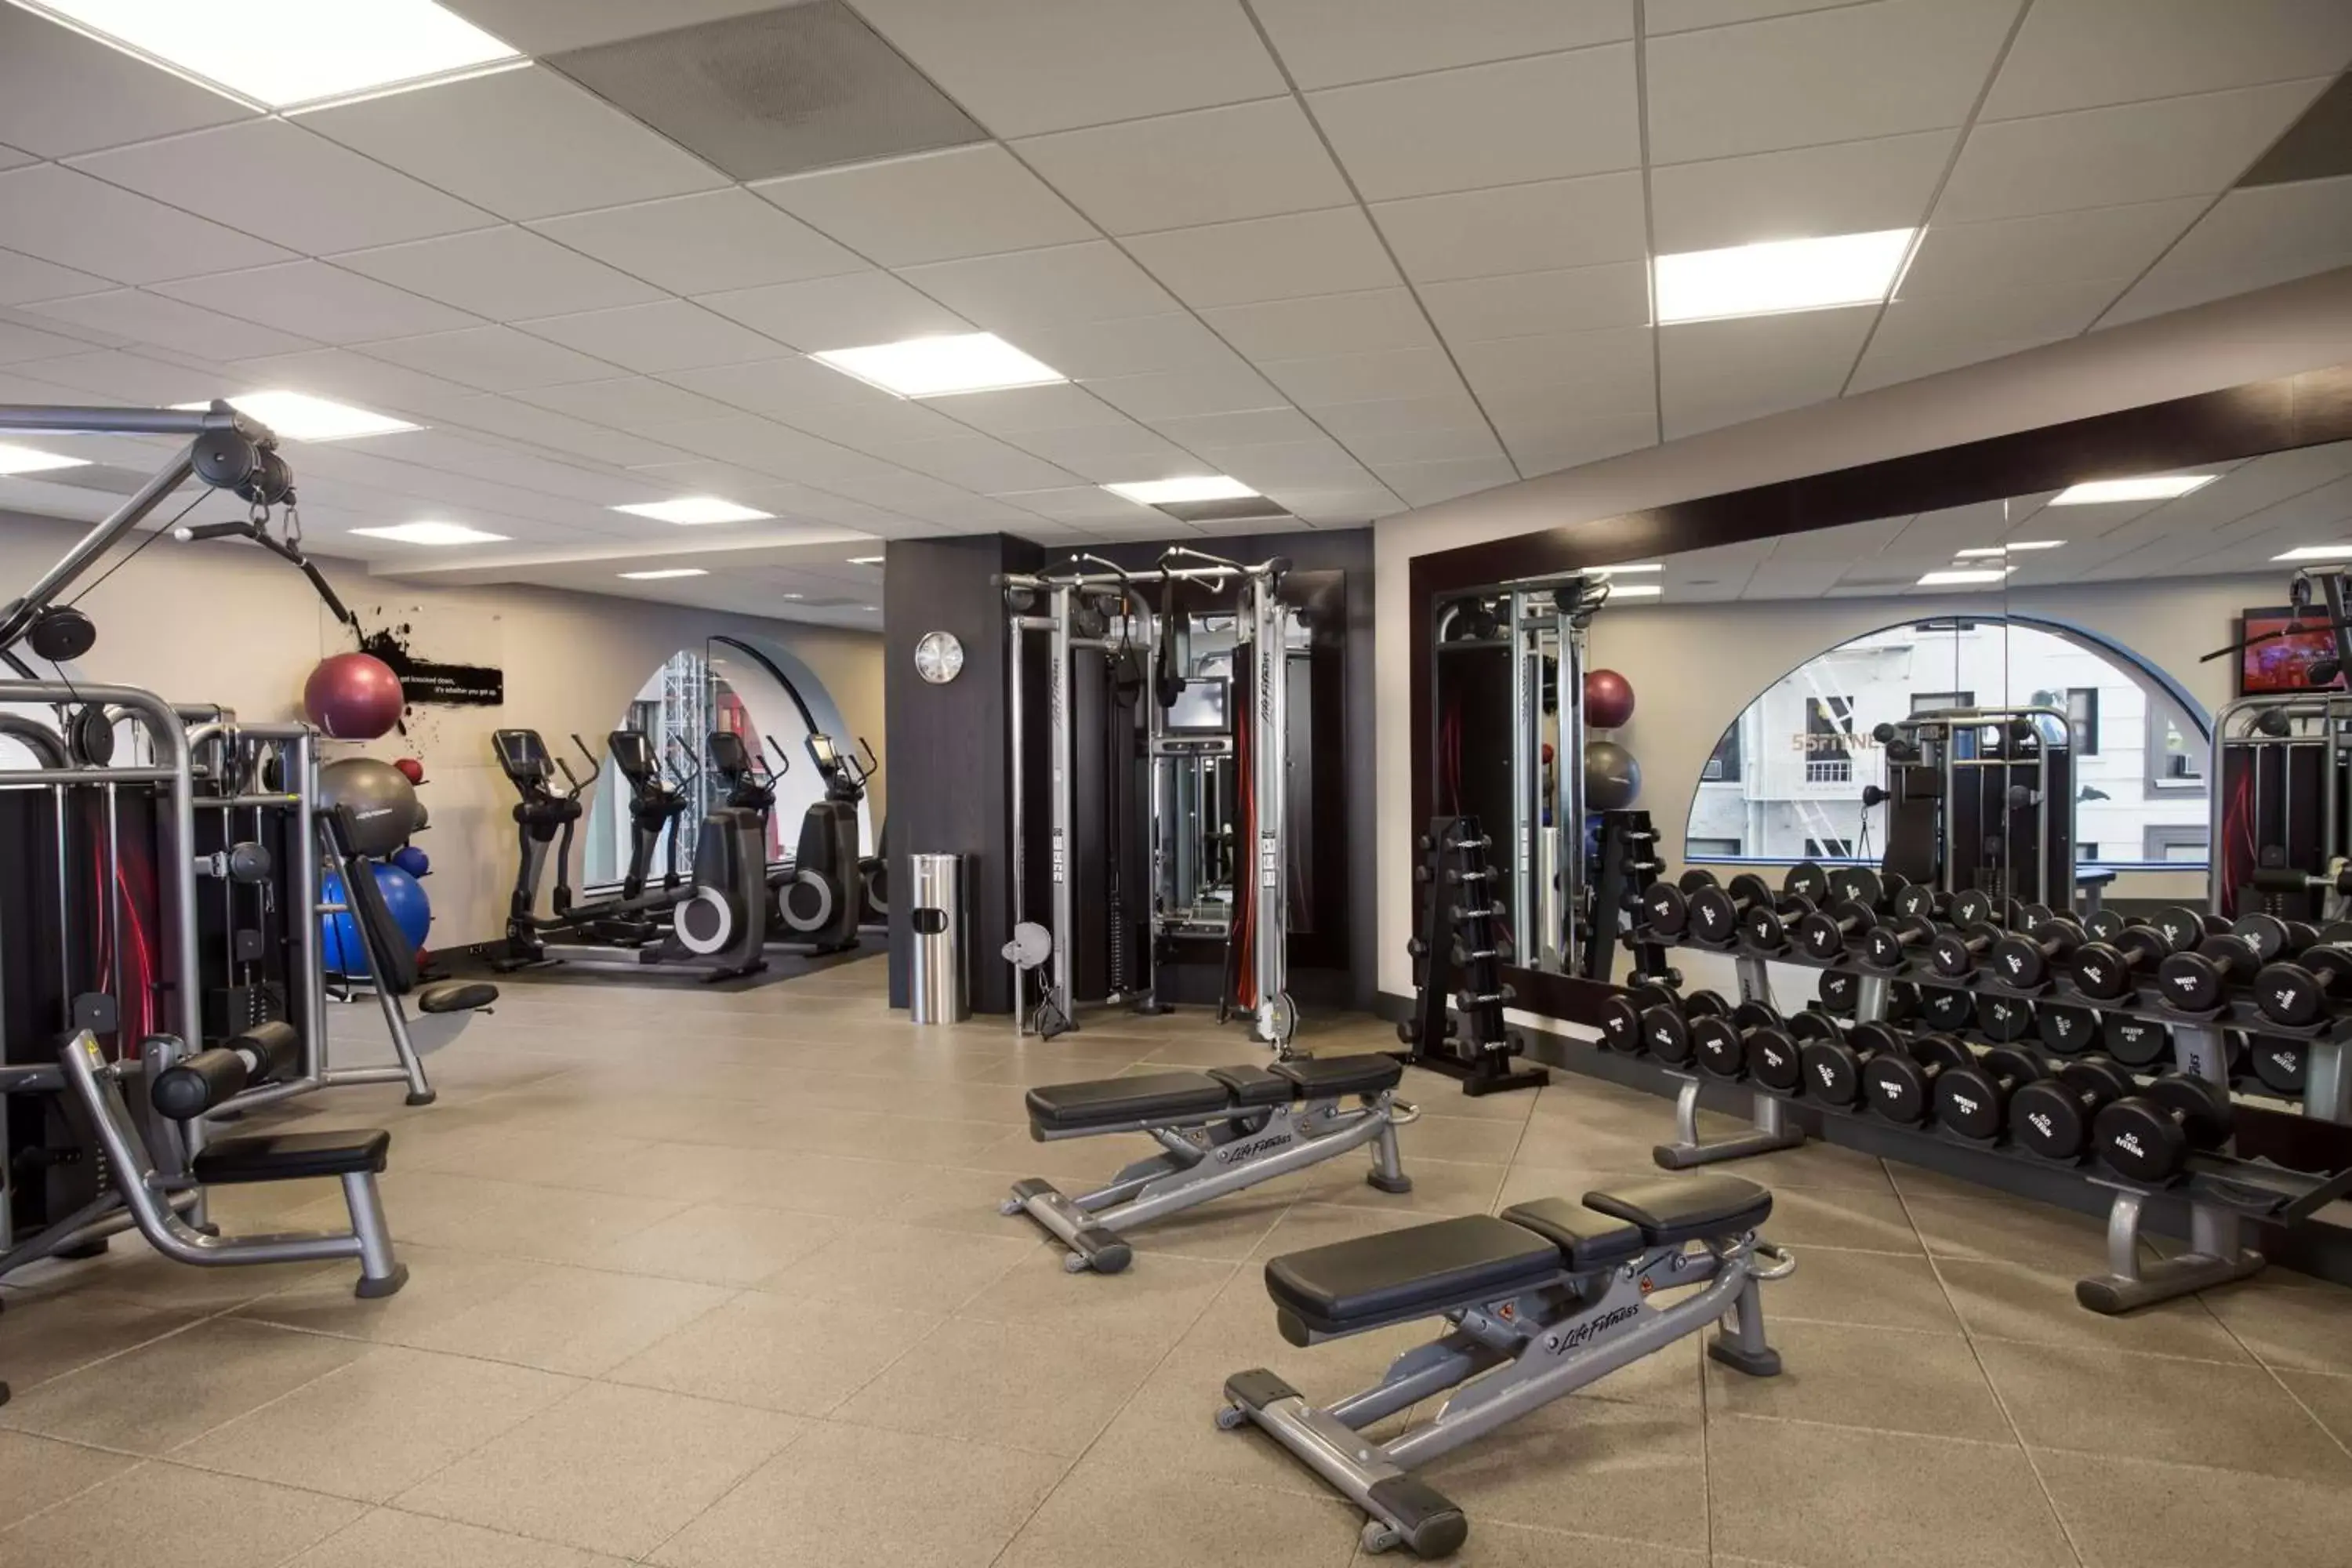 Fitness centre/facilities, Fitness Center/Facilities in Hilton Parc 55 San Francisco Union Square